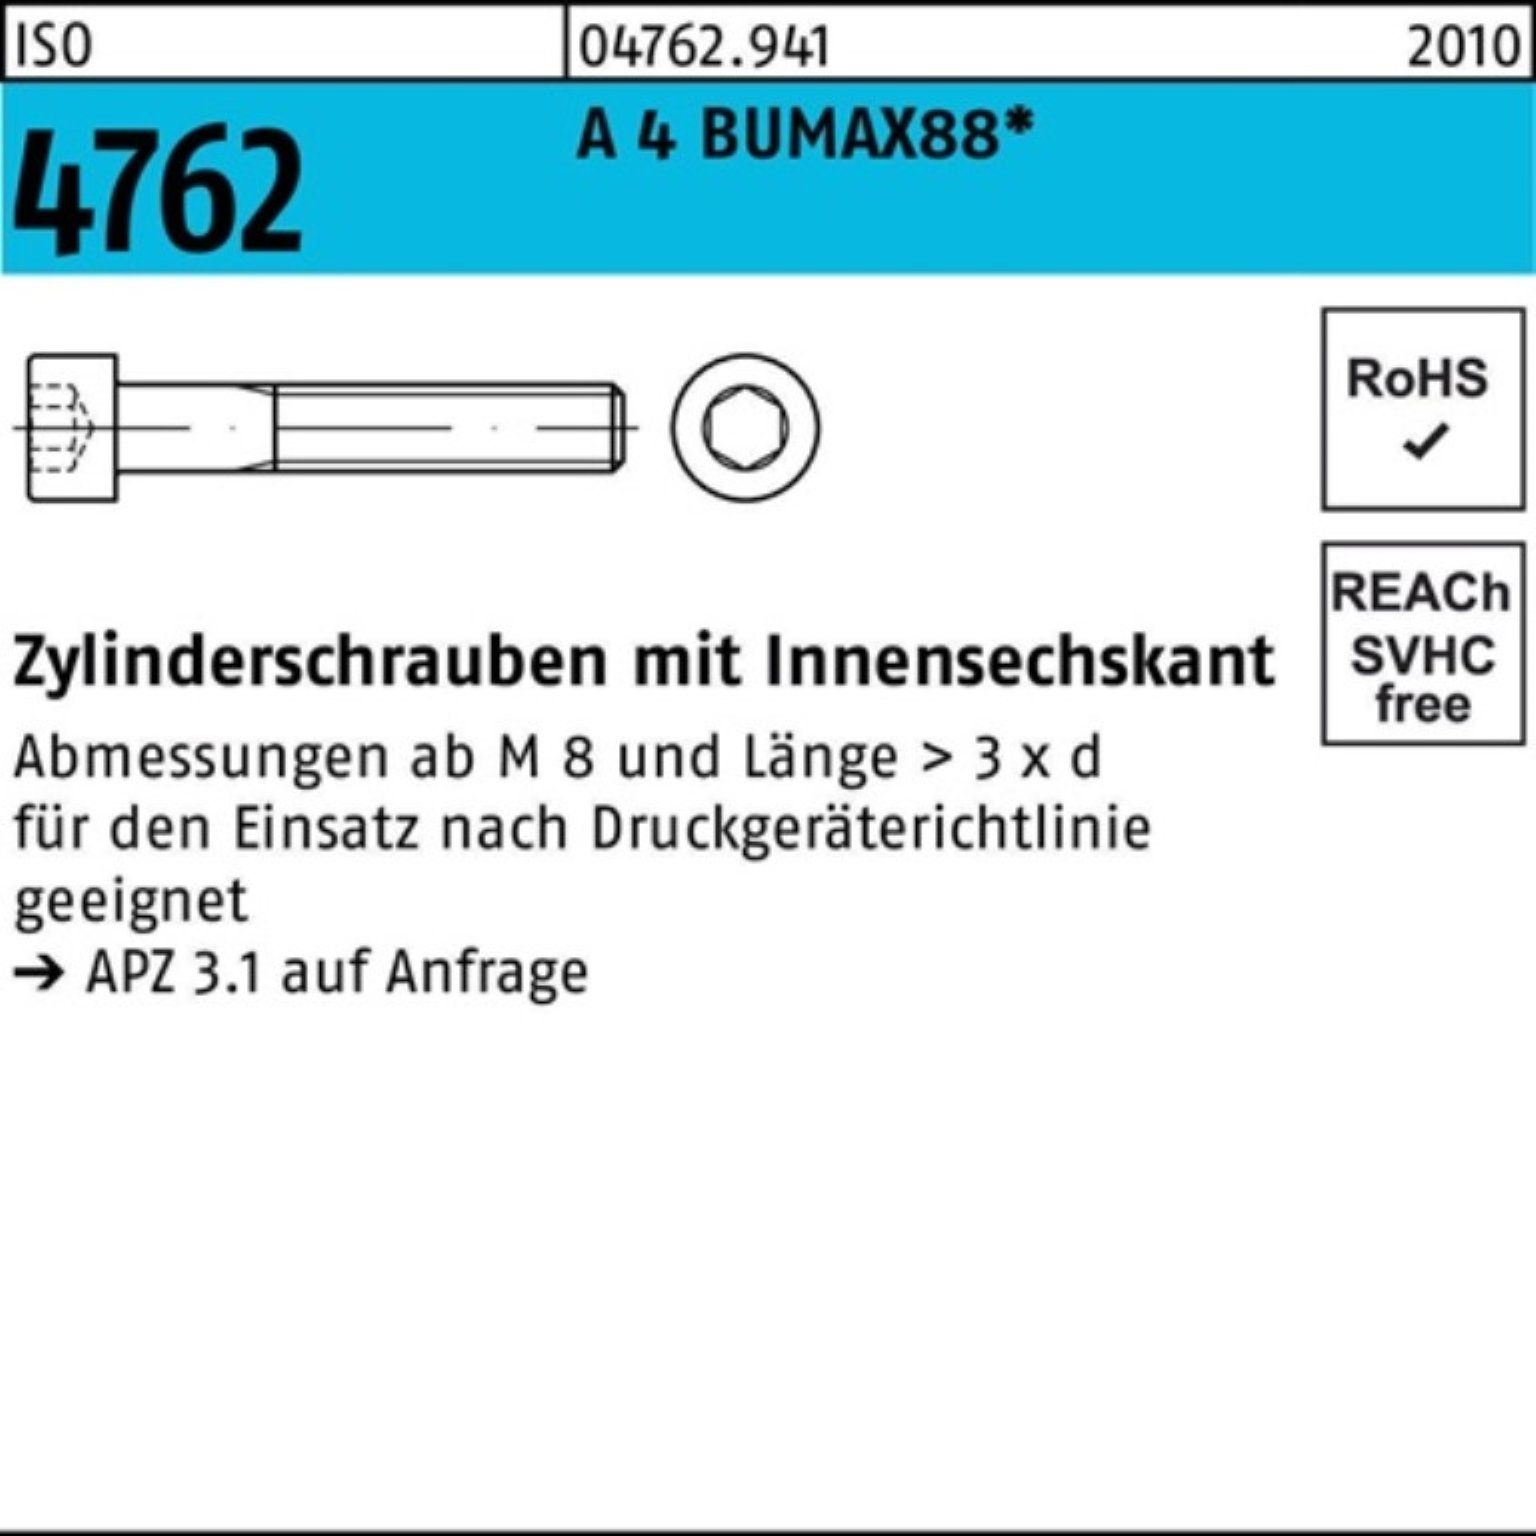 4762 Bufab ISO BUMAX88 M8x Pack 4 Zylinderschraube 16 Zylinderschraube Innen-6kt A S 100er 50